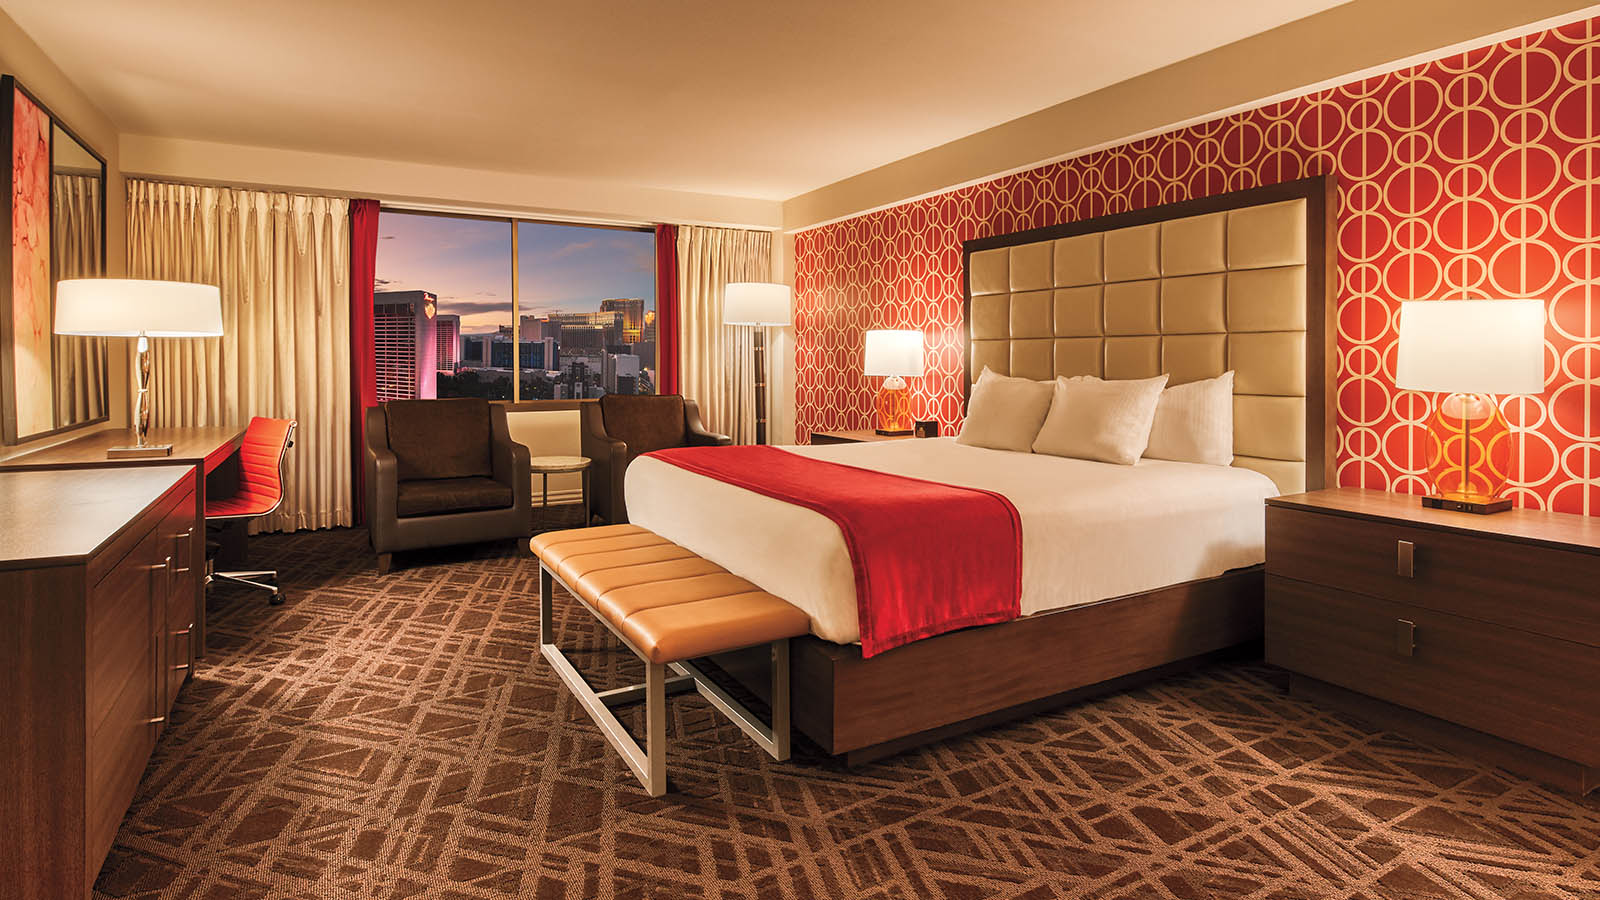 Harrah's Las Vegas Hotel and Casino - Las Vegas Strip